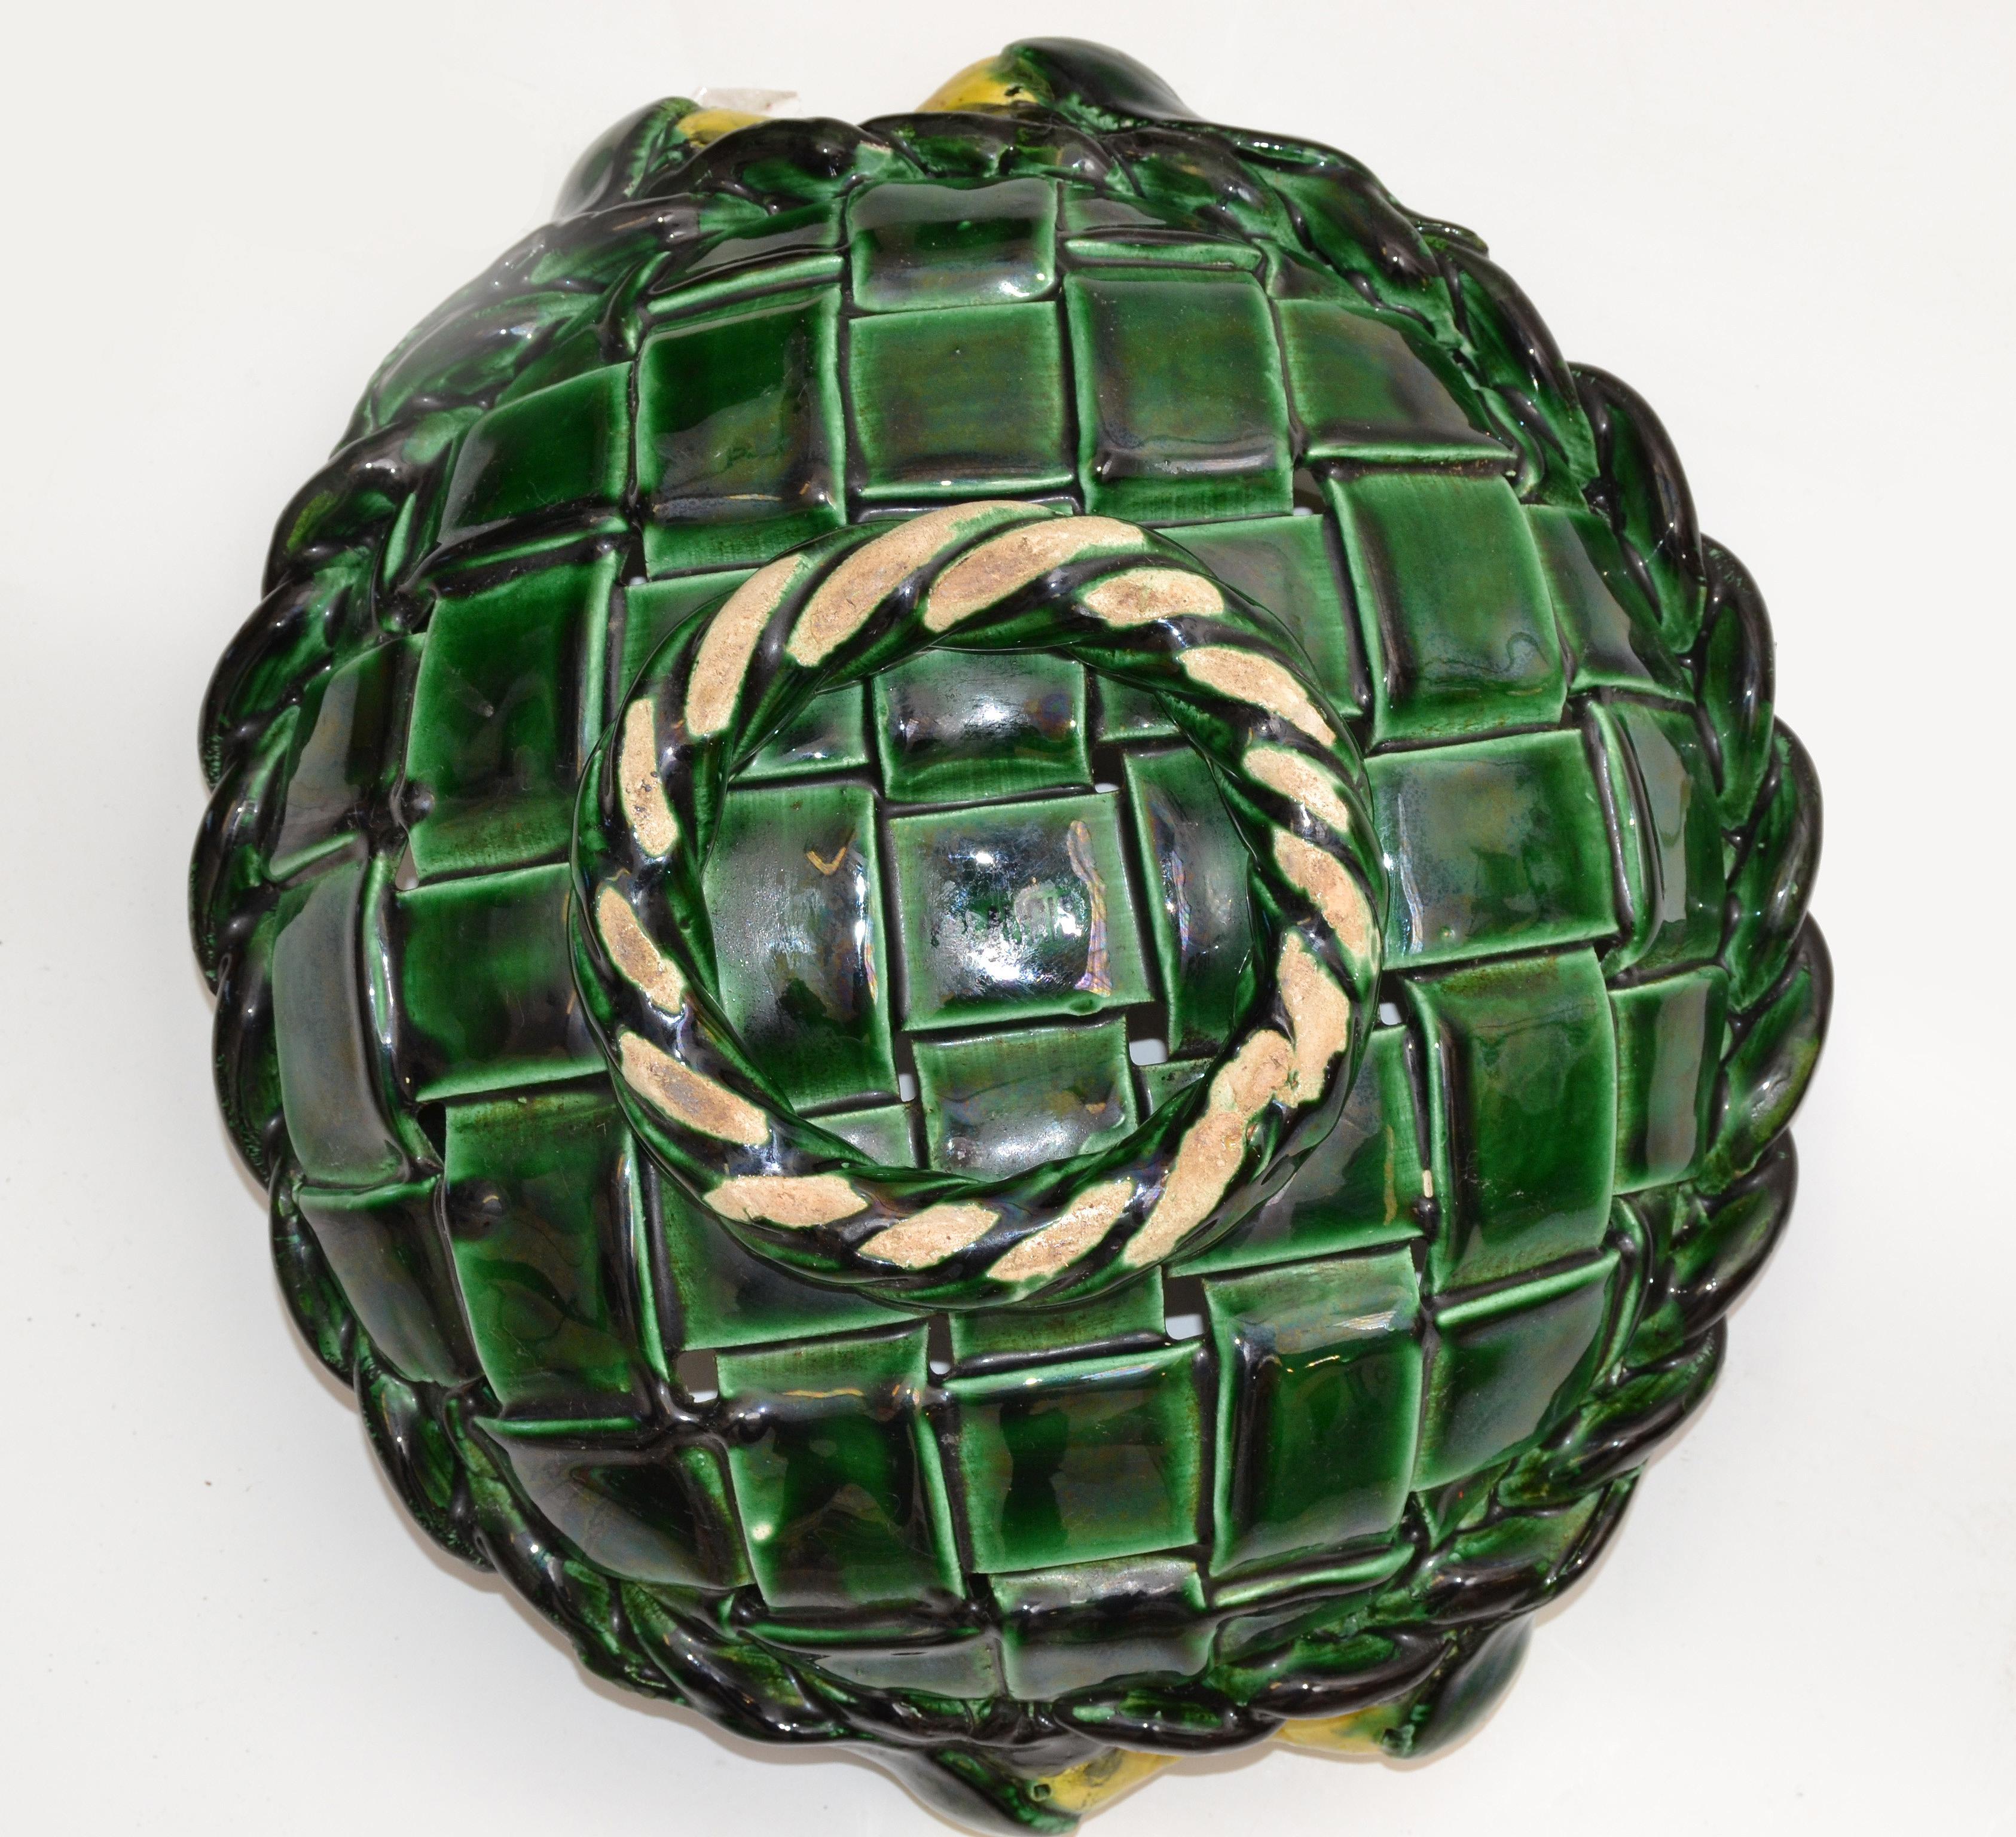 Marked Vallauris France Ceramic Lemon Basket Green & Yellow Mid-Century Modern For Sale 3